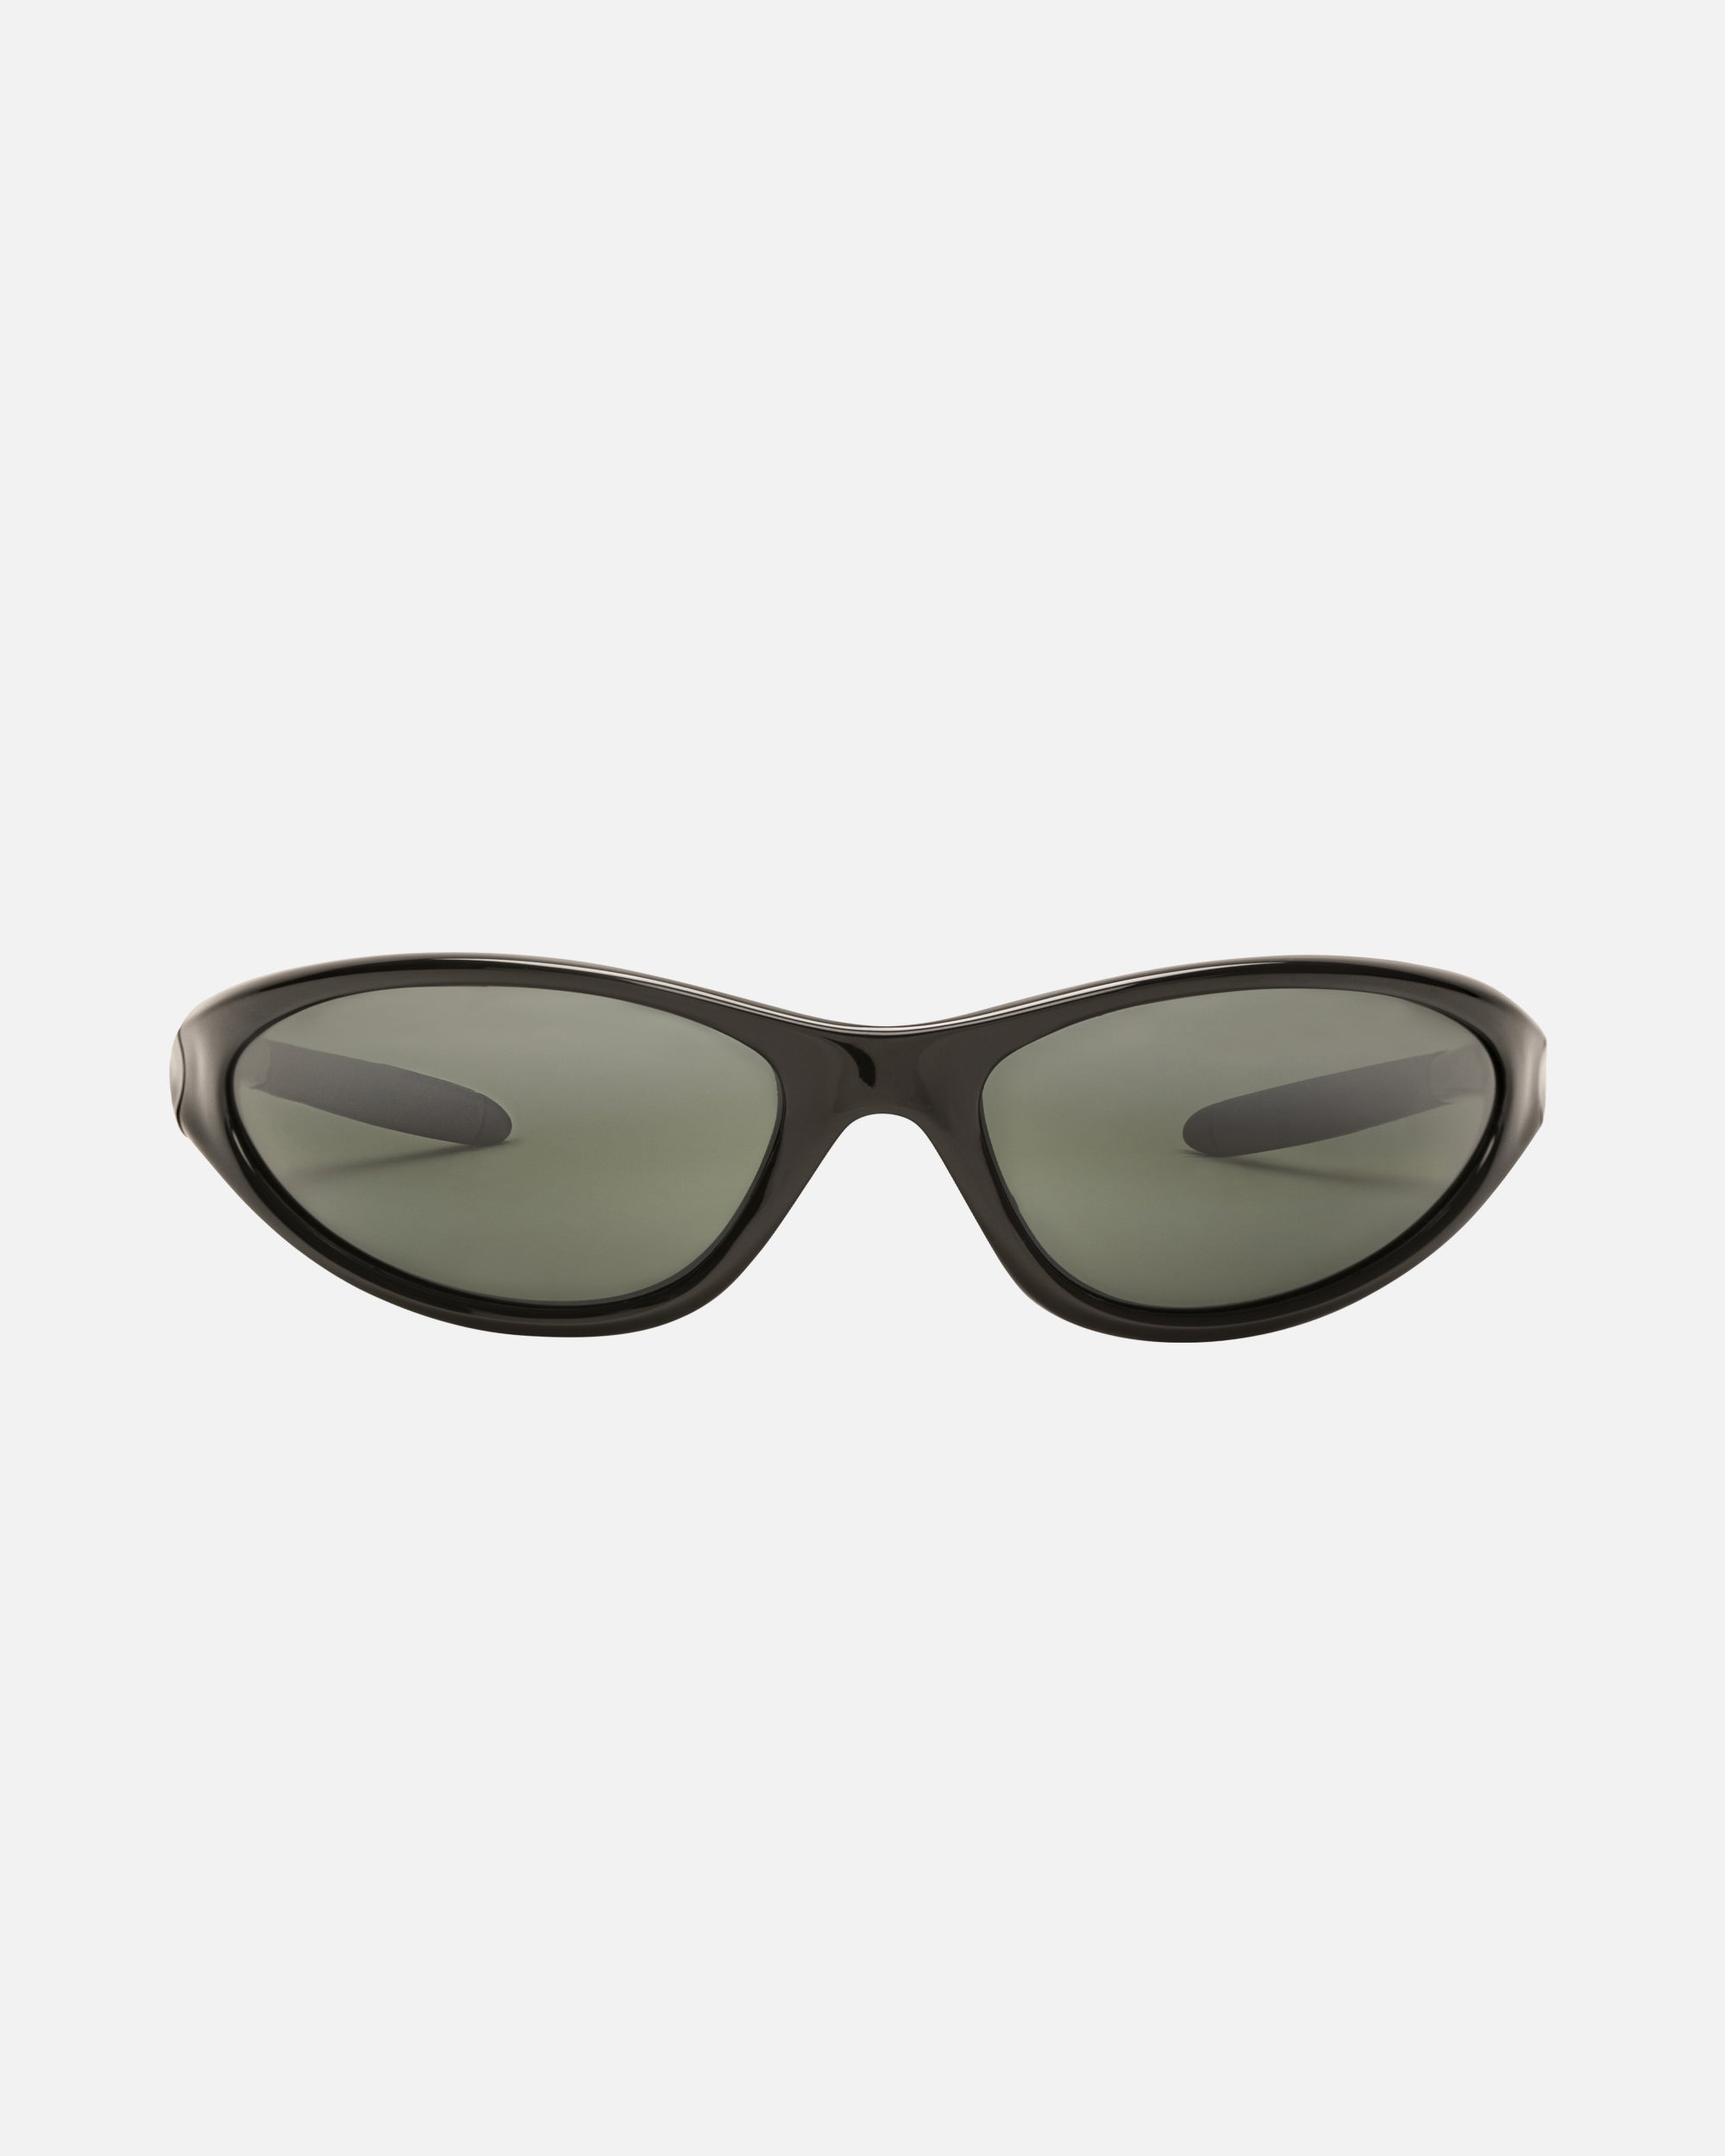 Vuarnet VL 1306 Sunglasses | FREE Shipping - Go-Optic.com - SOLD OUT